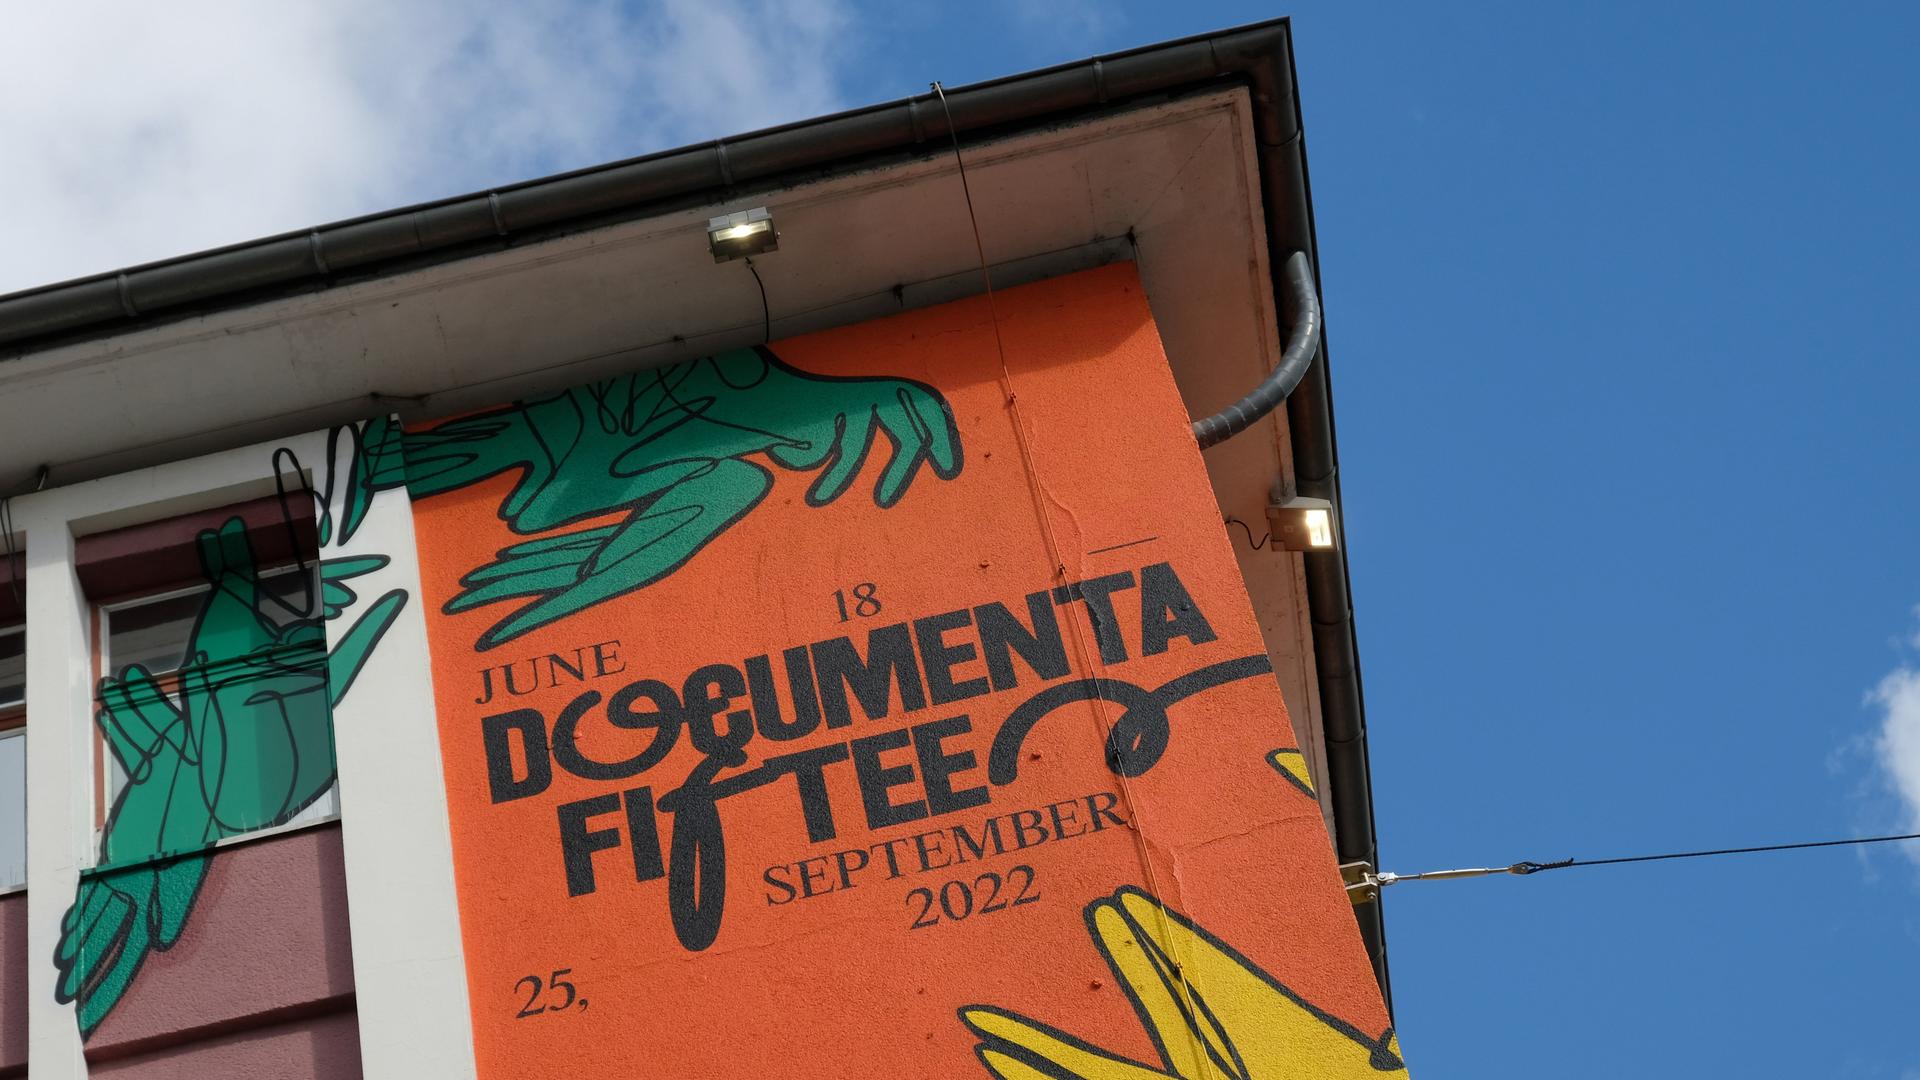 Der Schriftzug "documenta fifteen" und das Logo des indonesischen Kuratorenkollektivs Ruangrupa prangt an einer Fassade